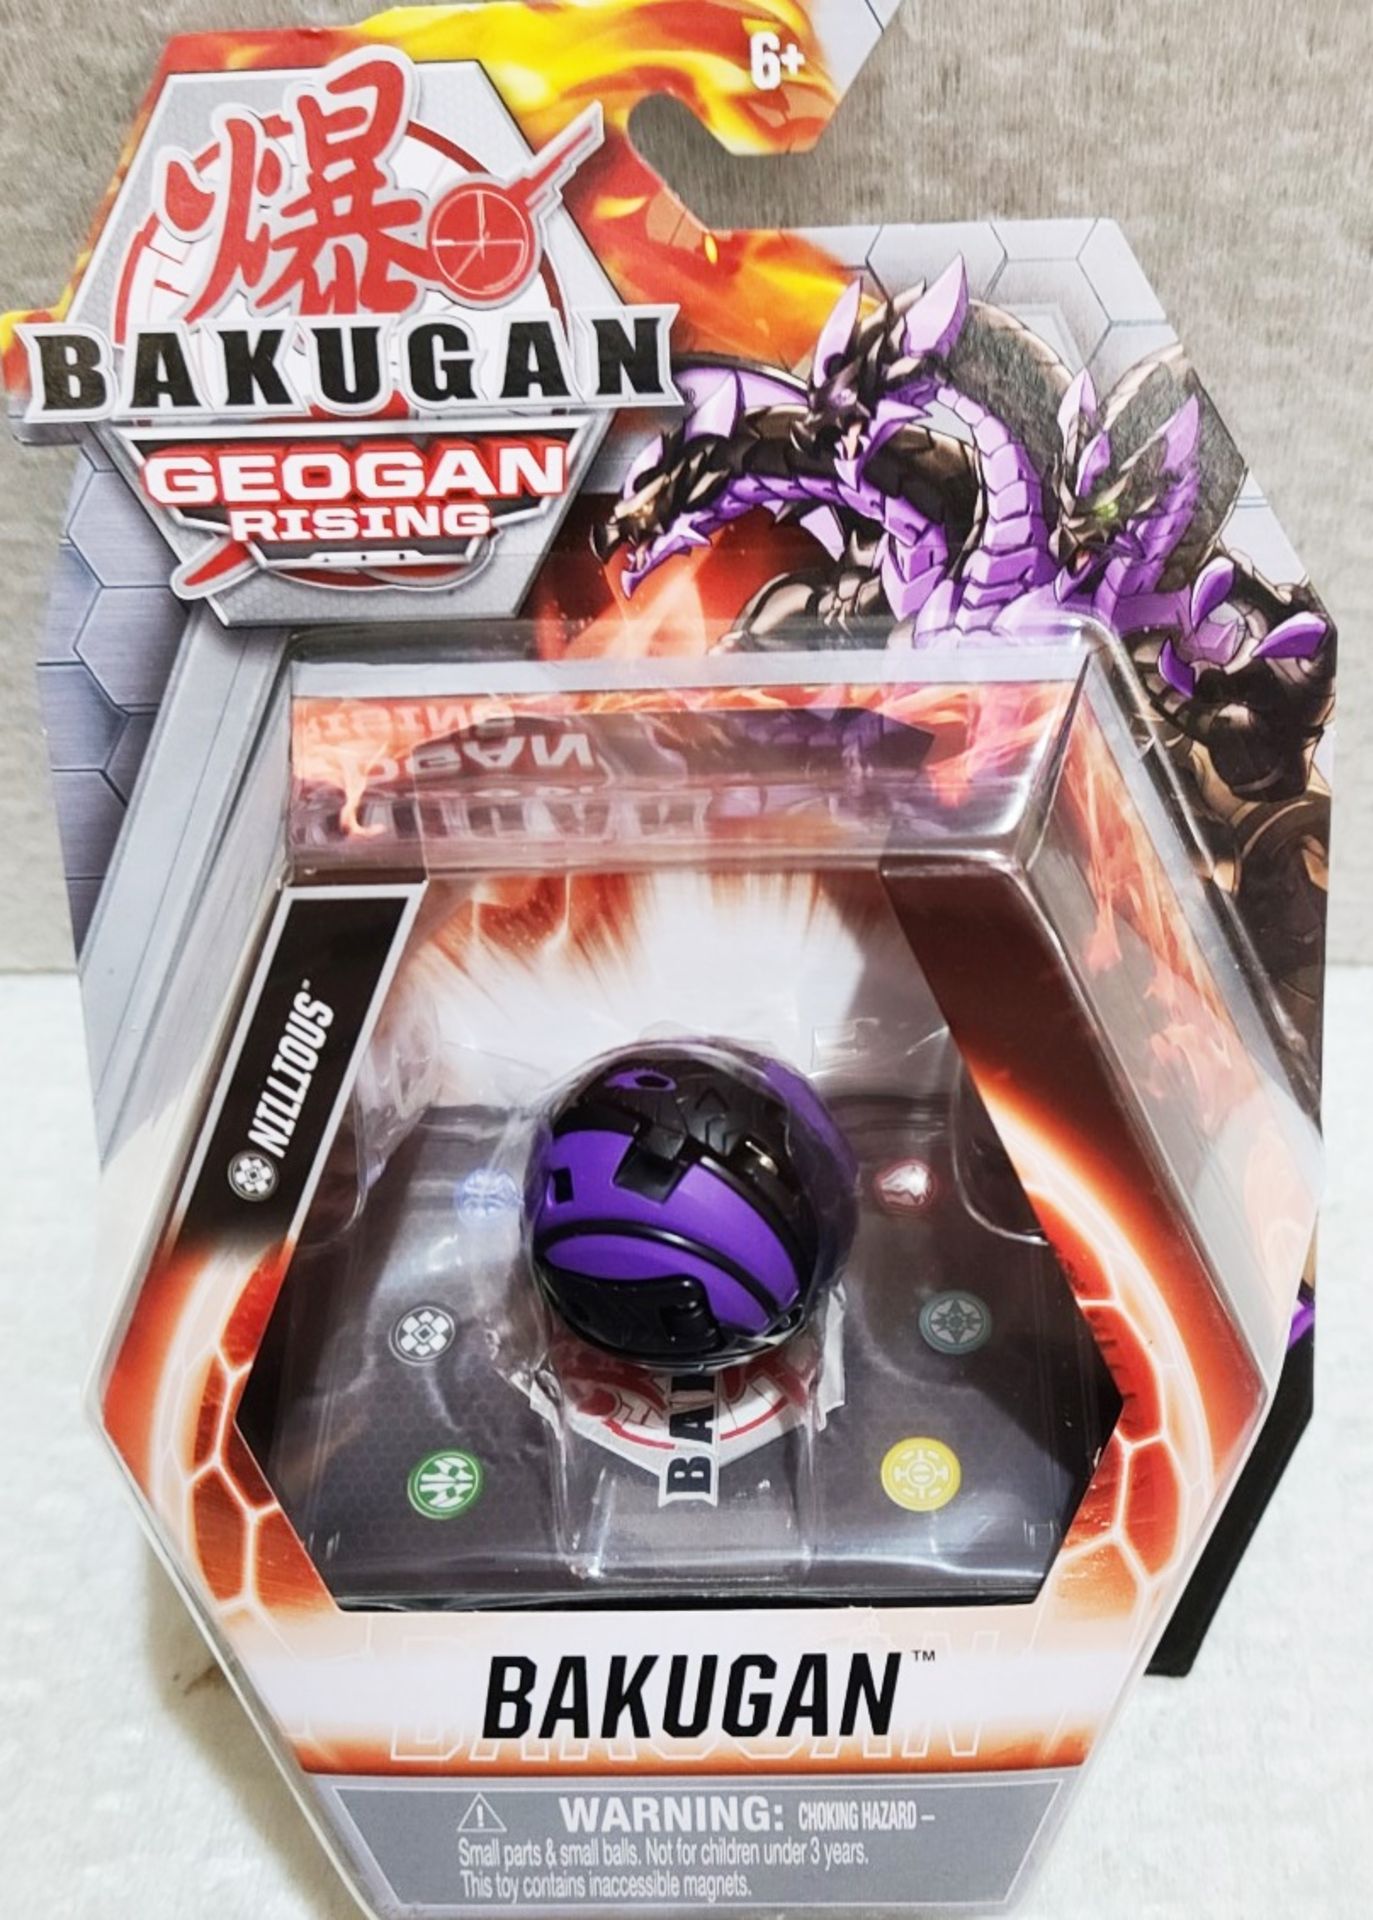 4 x BAKUGAN Bakugan Geogan Rising - Core Collectible Action Figures - Image 5 of 8